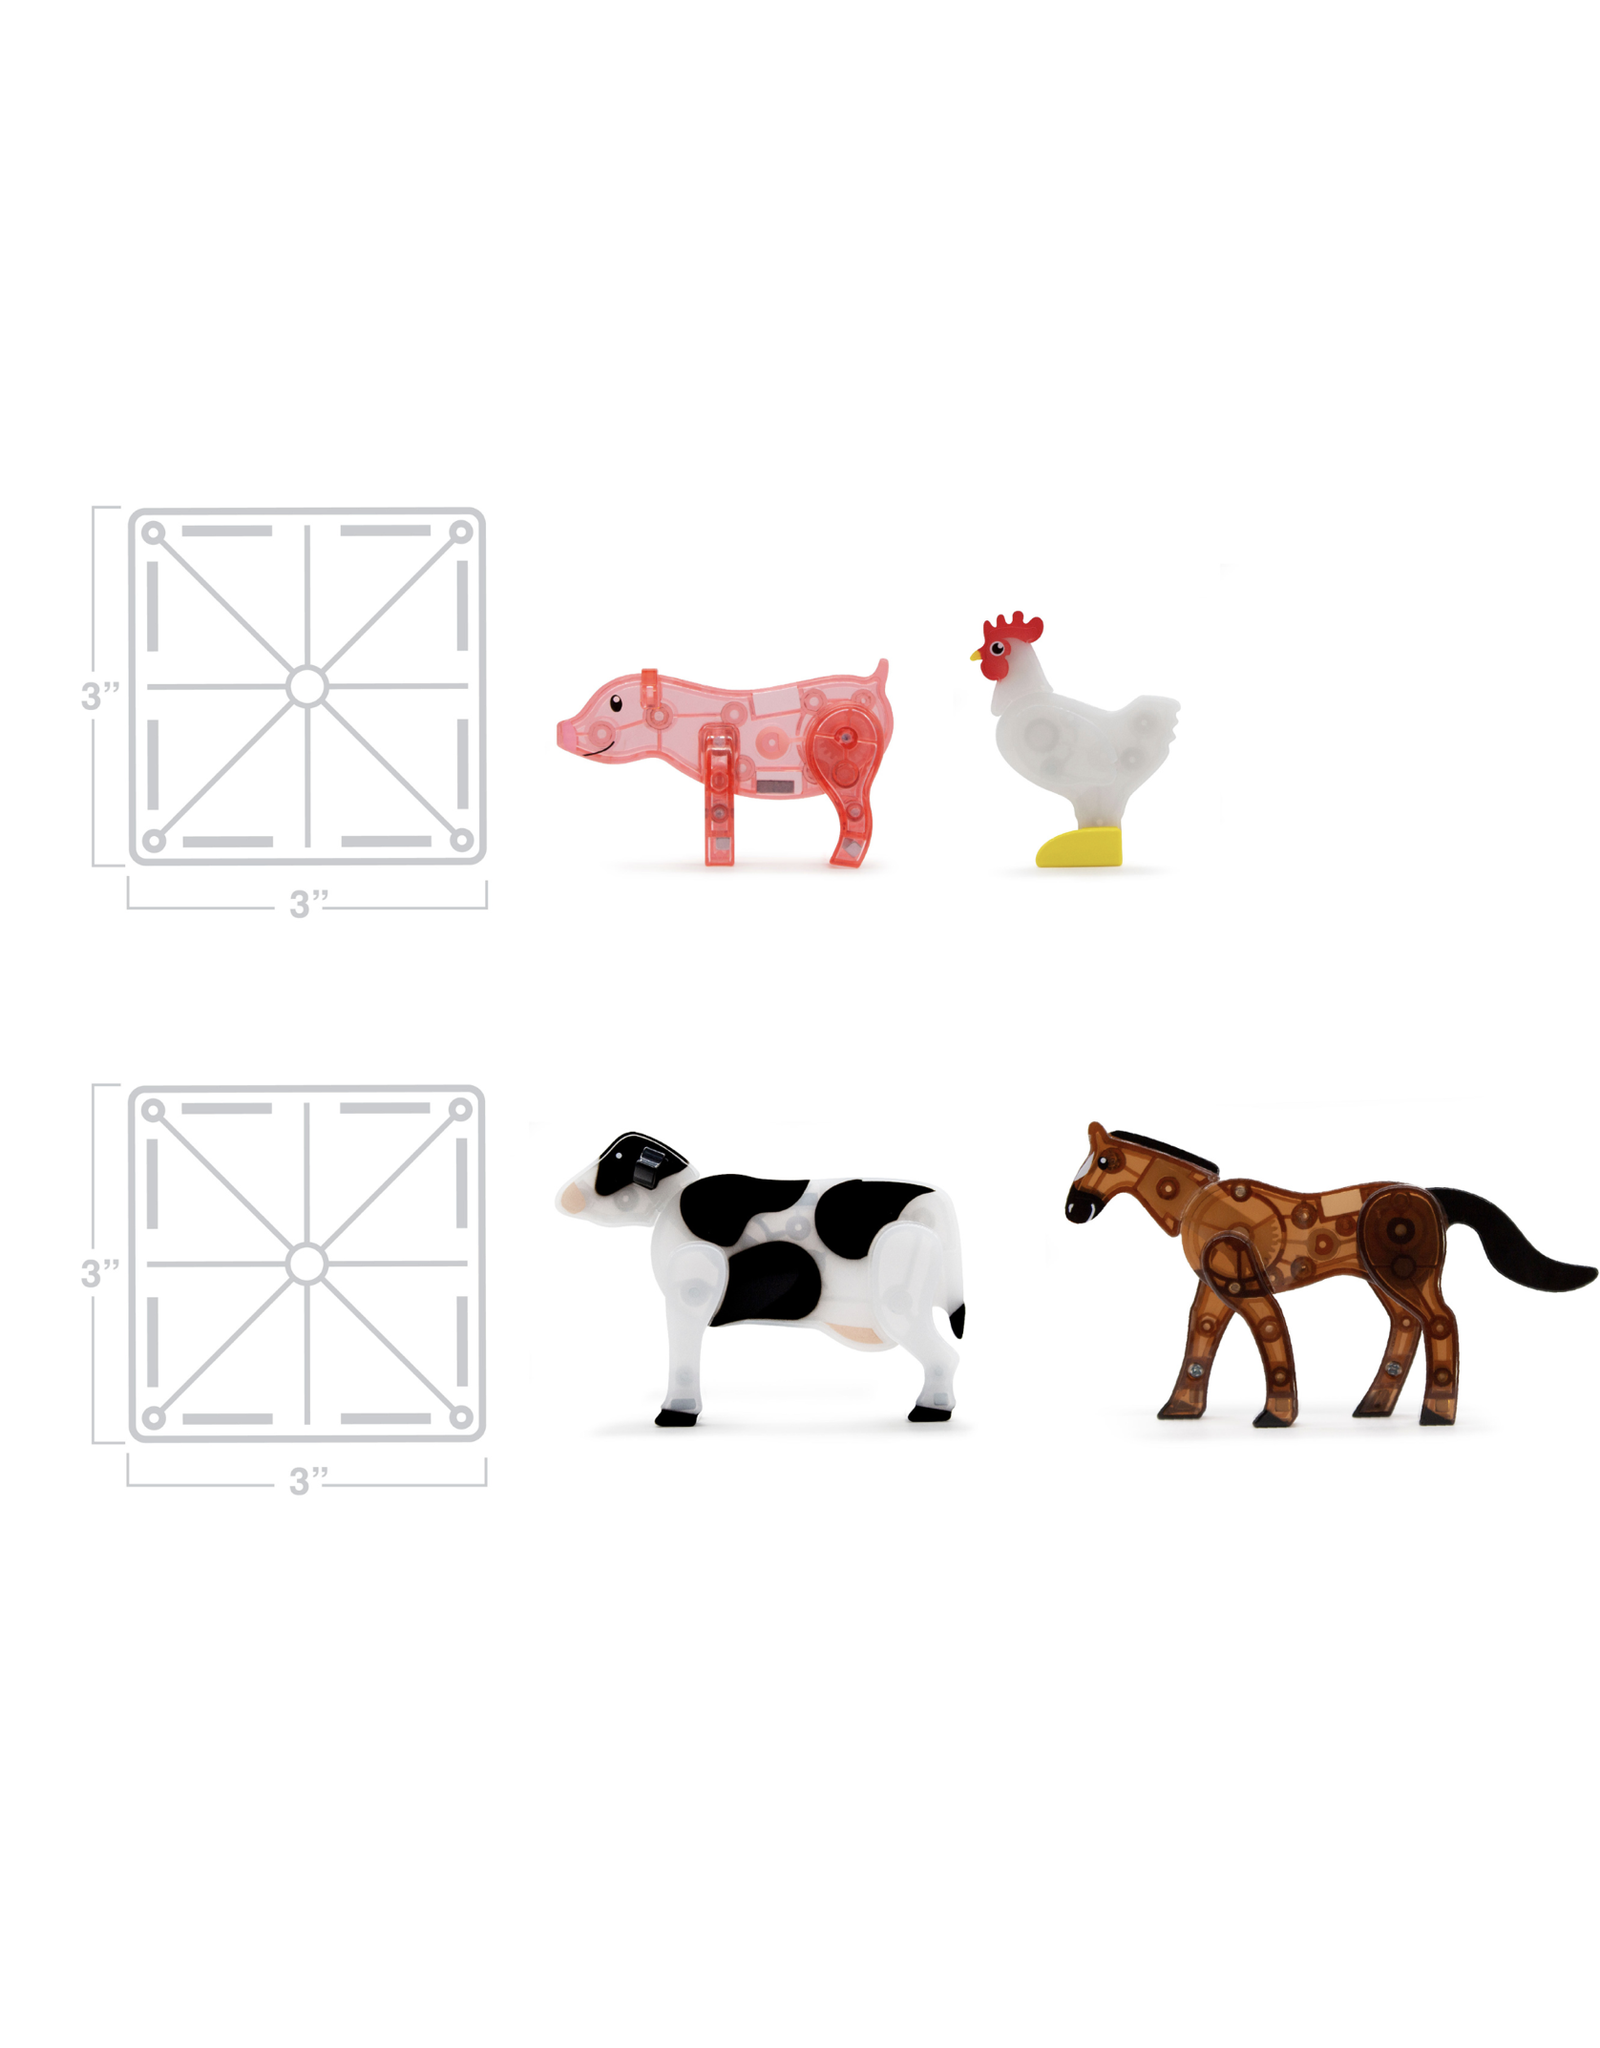 Maison Colette Magna Tiles Farm animals 25 stuks